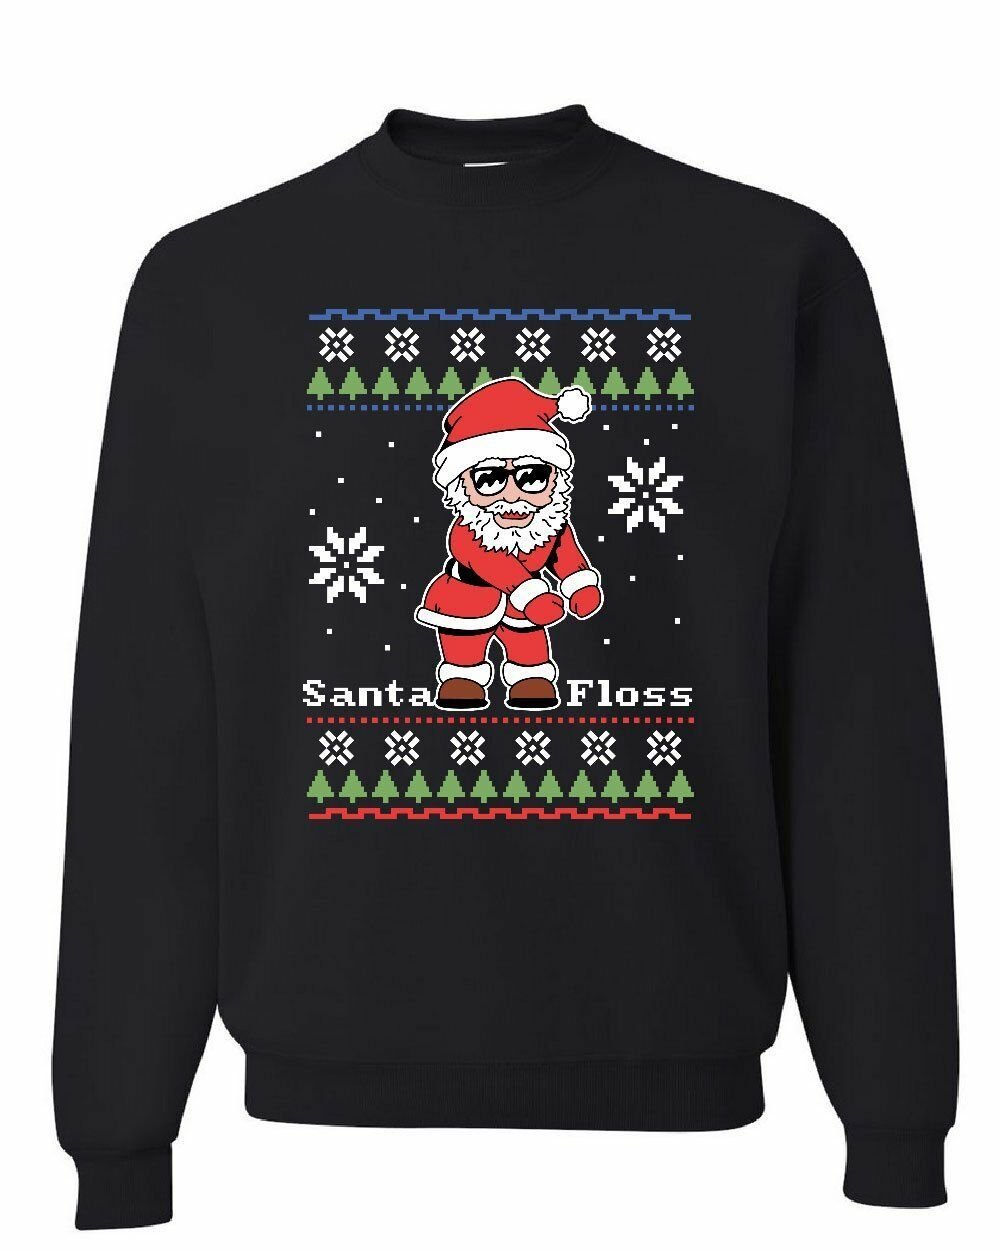 Santa Floss Merry Christmas Snowflakes Style: Sweatshirt, Color: Black